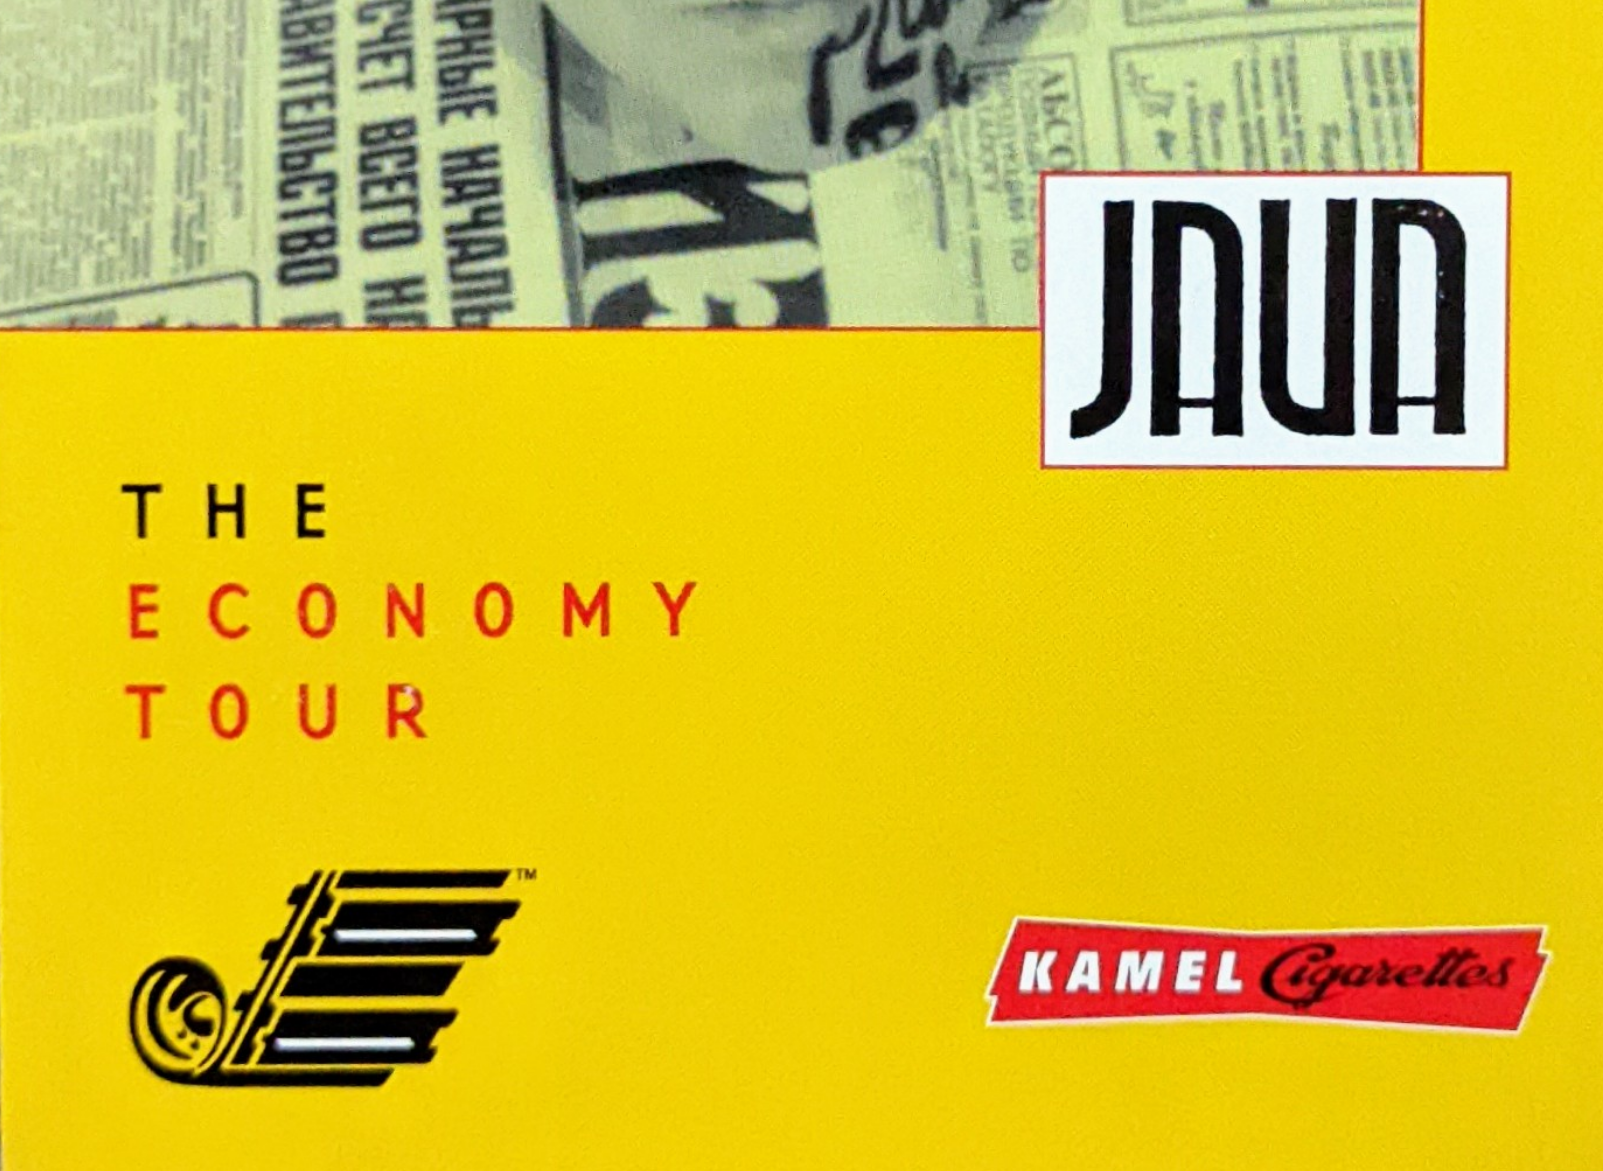 The Economy Tour Show at Java, Royal Oak, November 1997